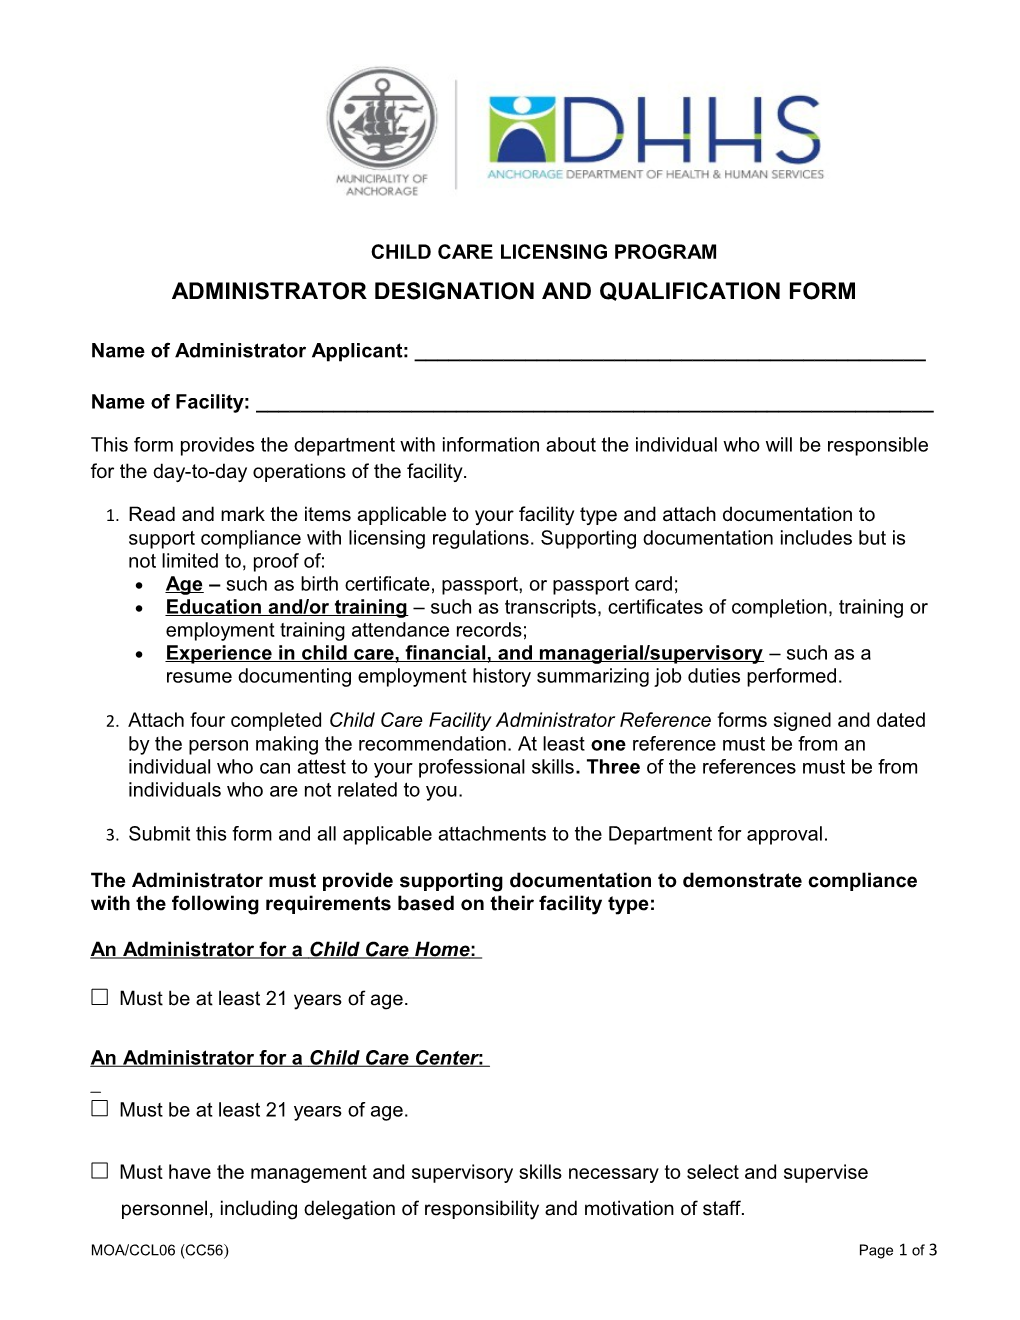 CCL06 Administrator Designation and Qualification Form